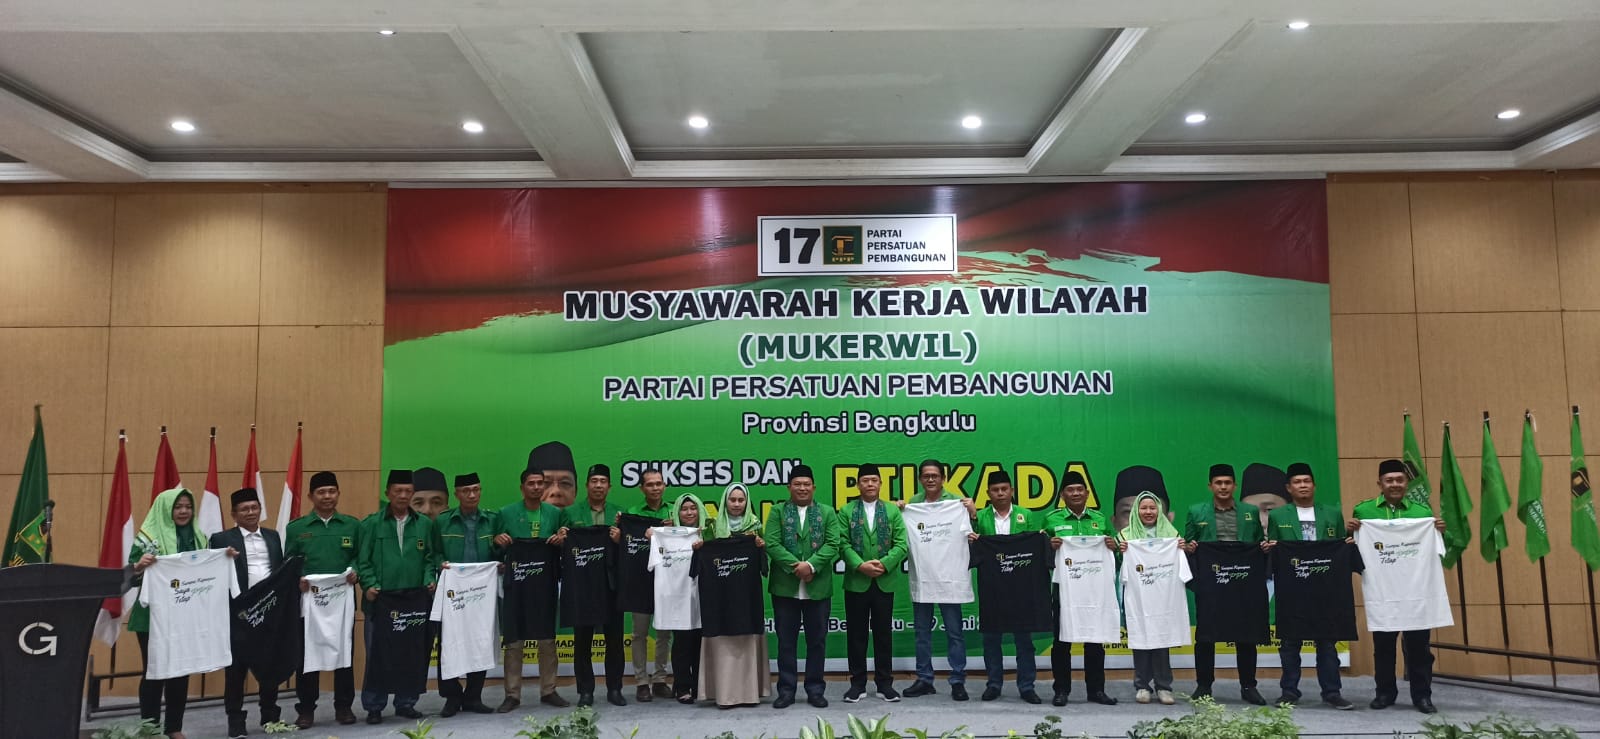 Mukerwil Partai Persatuan Pembangunan di Provinsi Bengkulu, Ada 2 Kader Partai Maju Tahapan Pilkada 2024